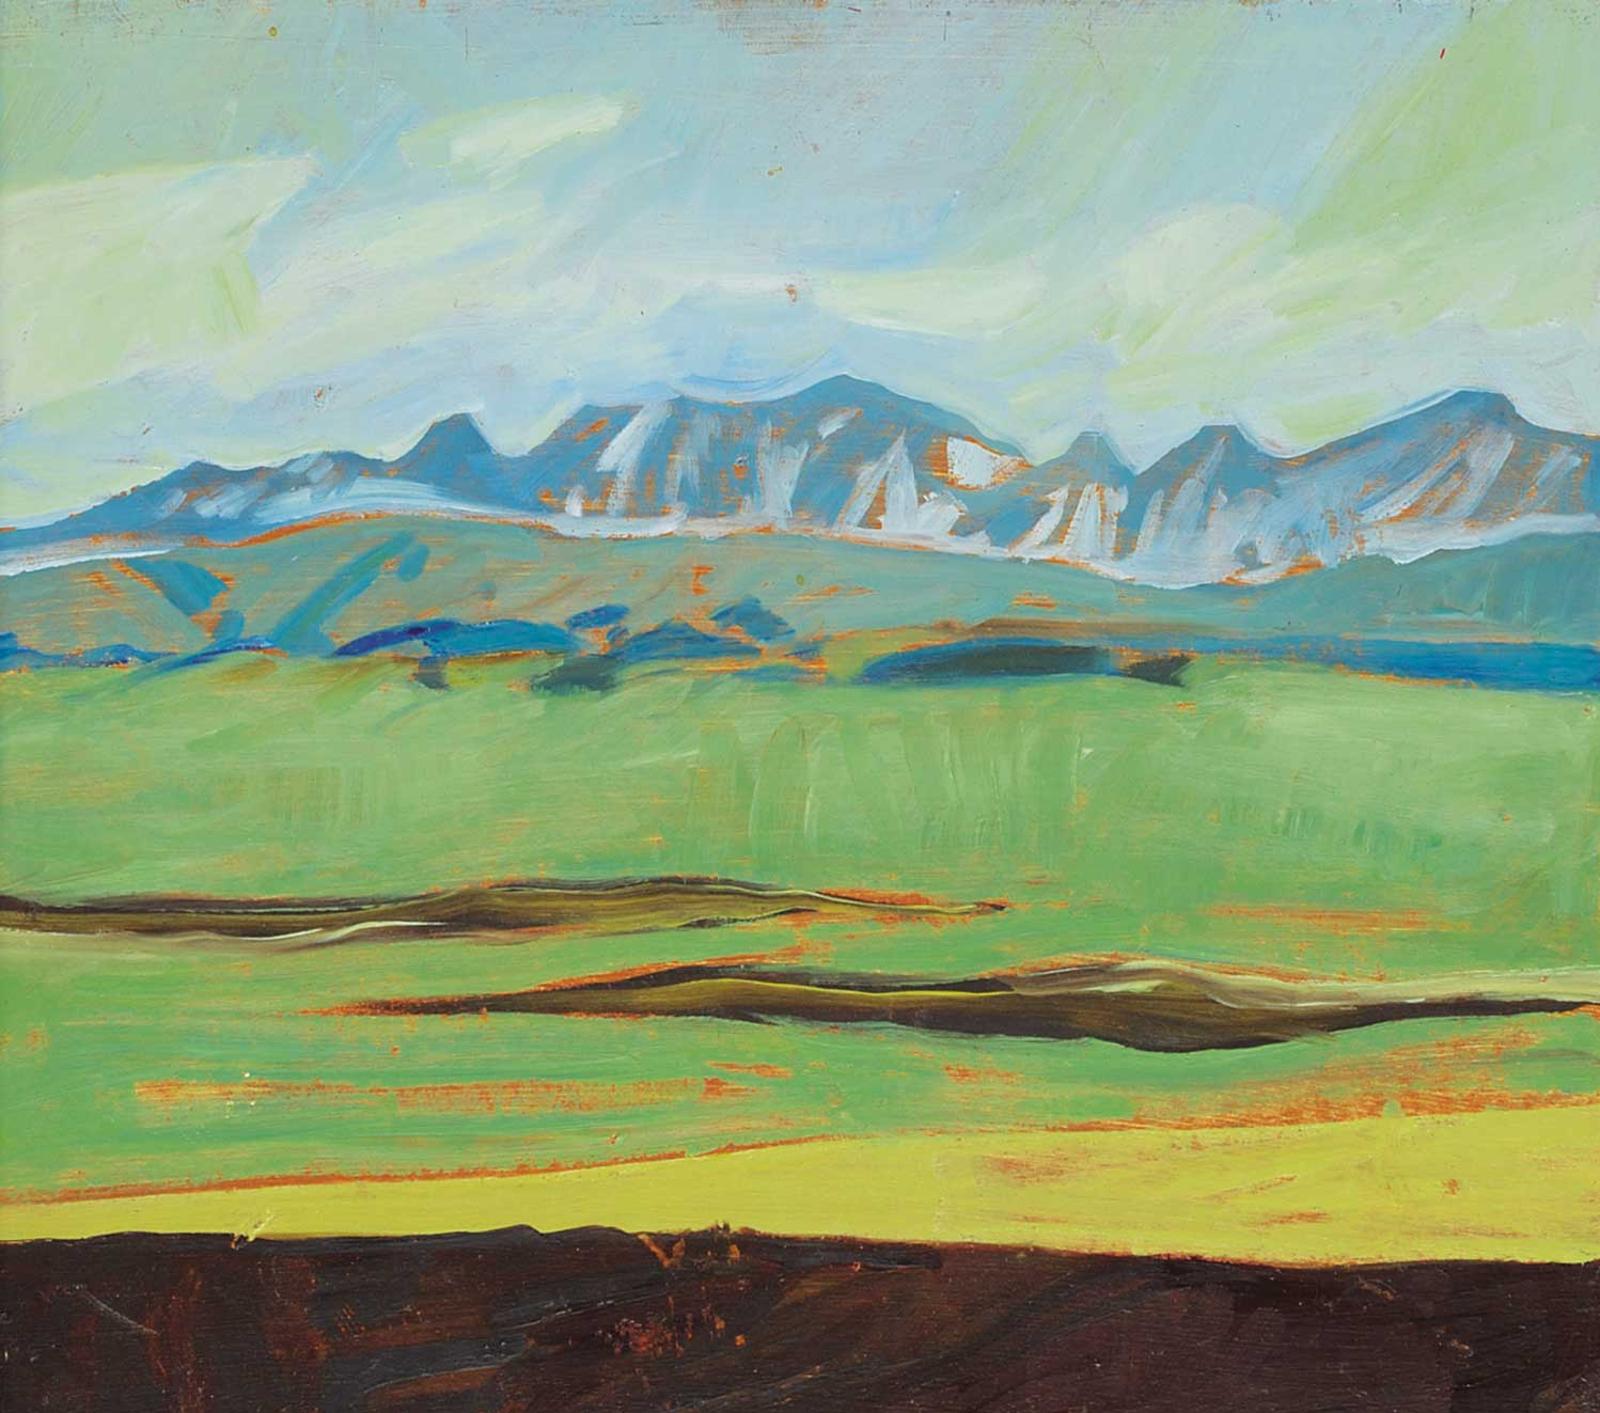 Ian Muir Jamieson - Untitled - View of the Rockies